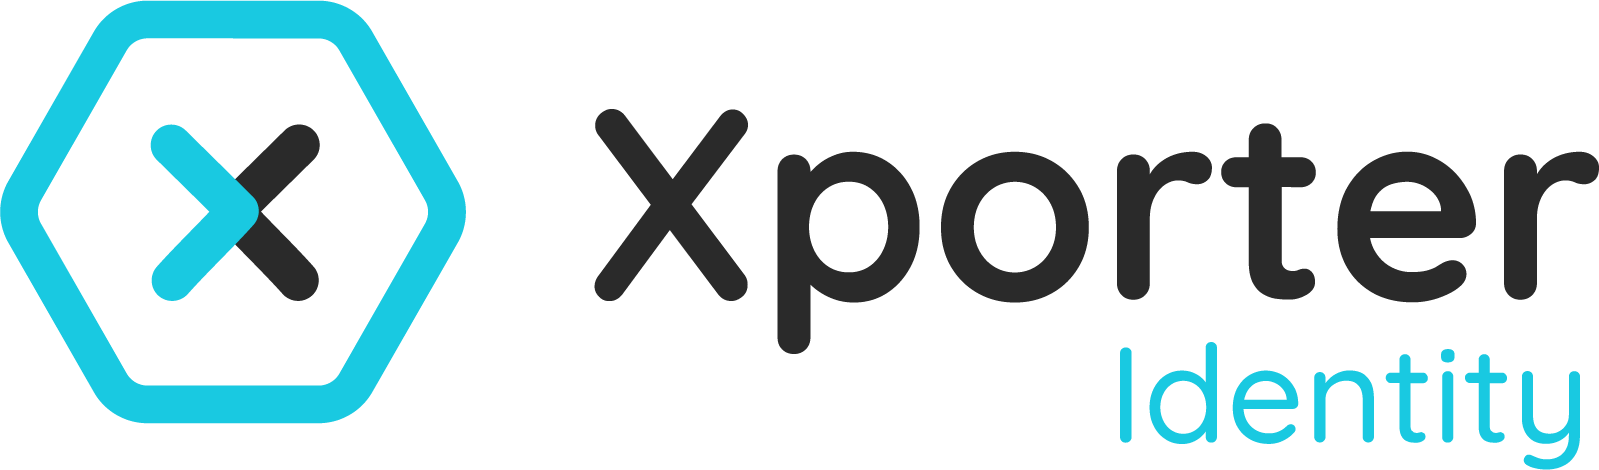 Login | Xporter Identity logo